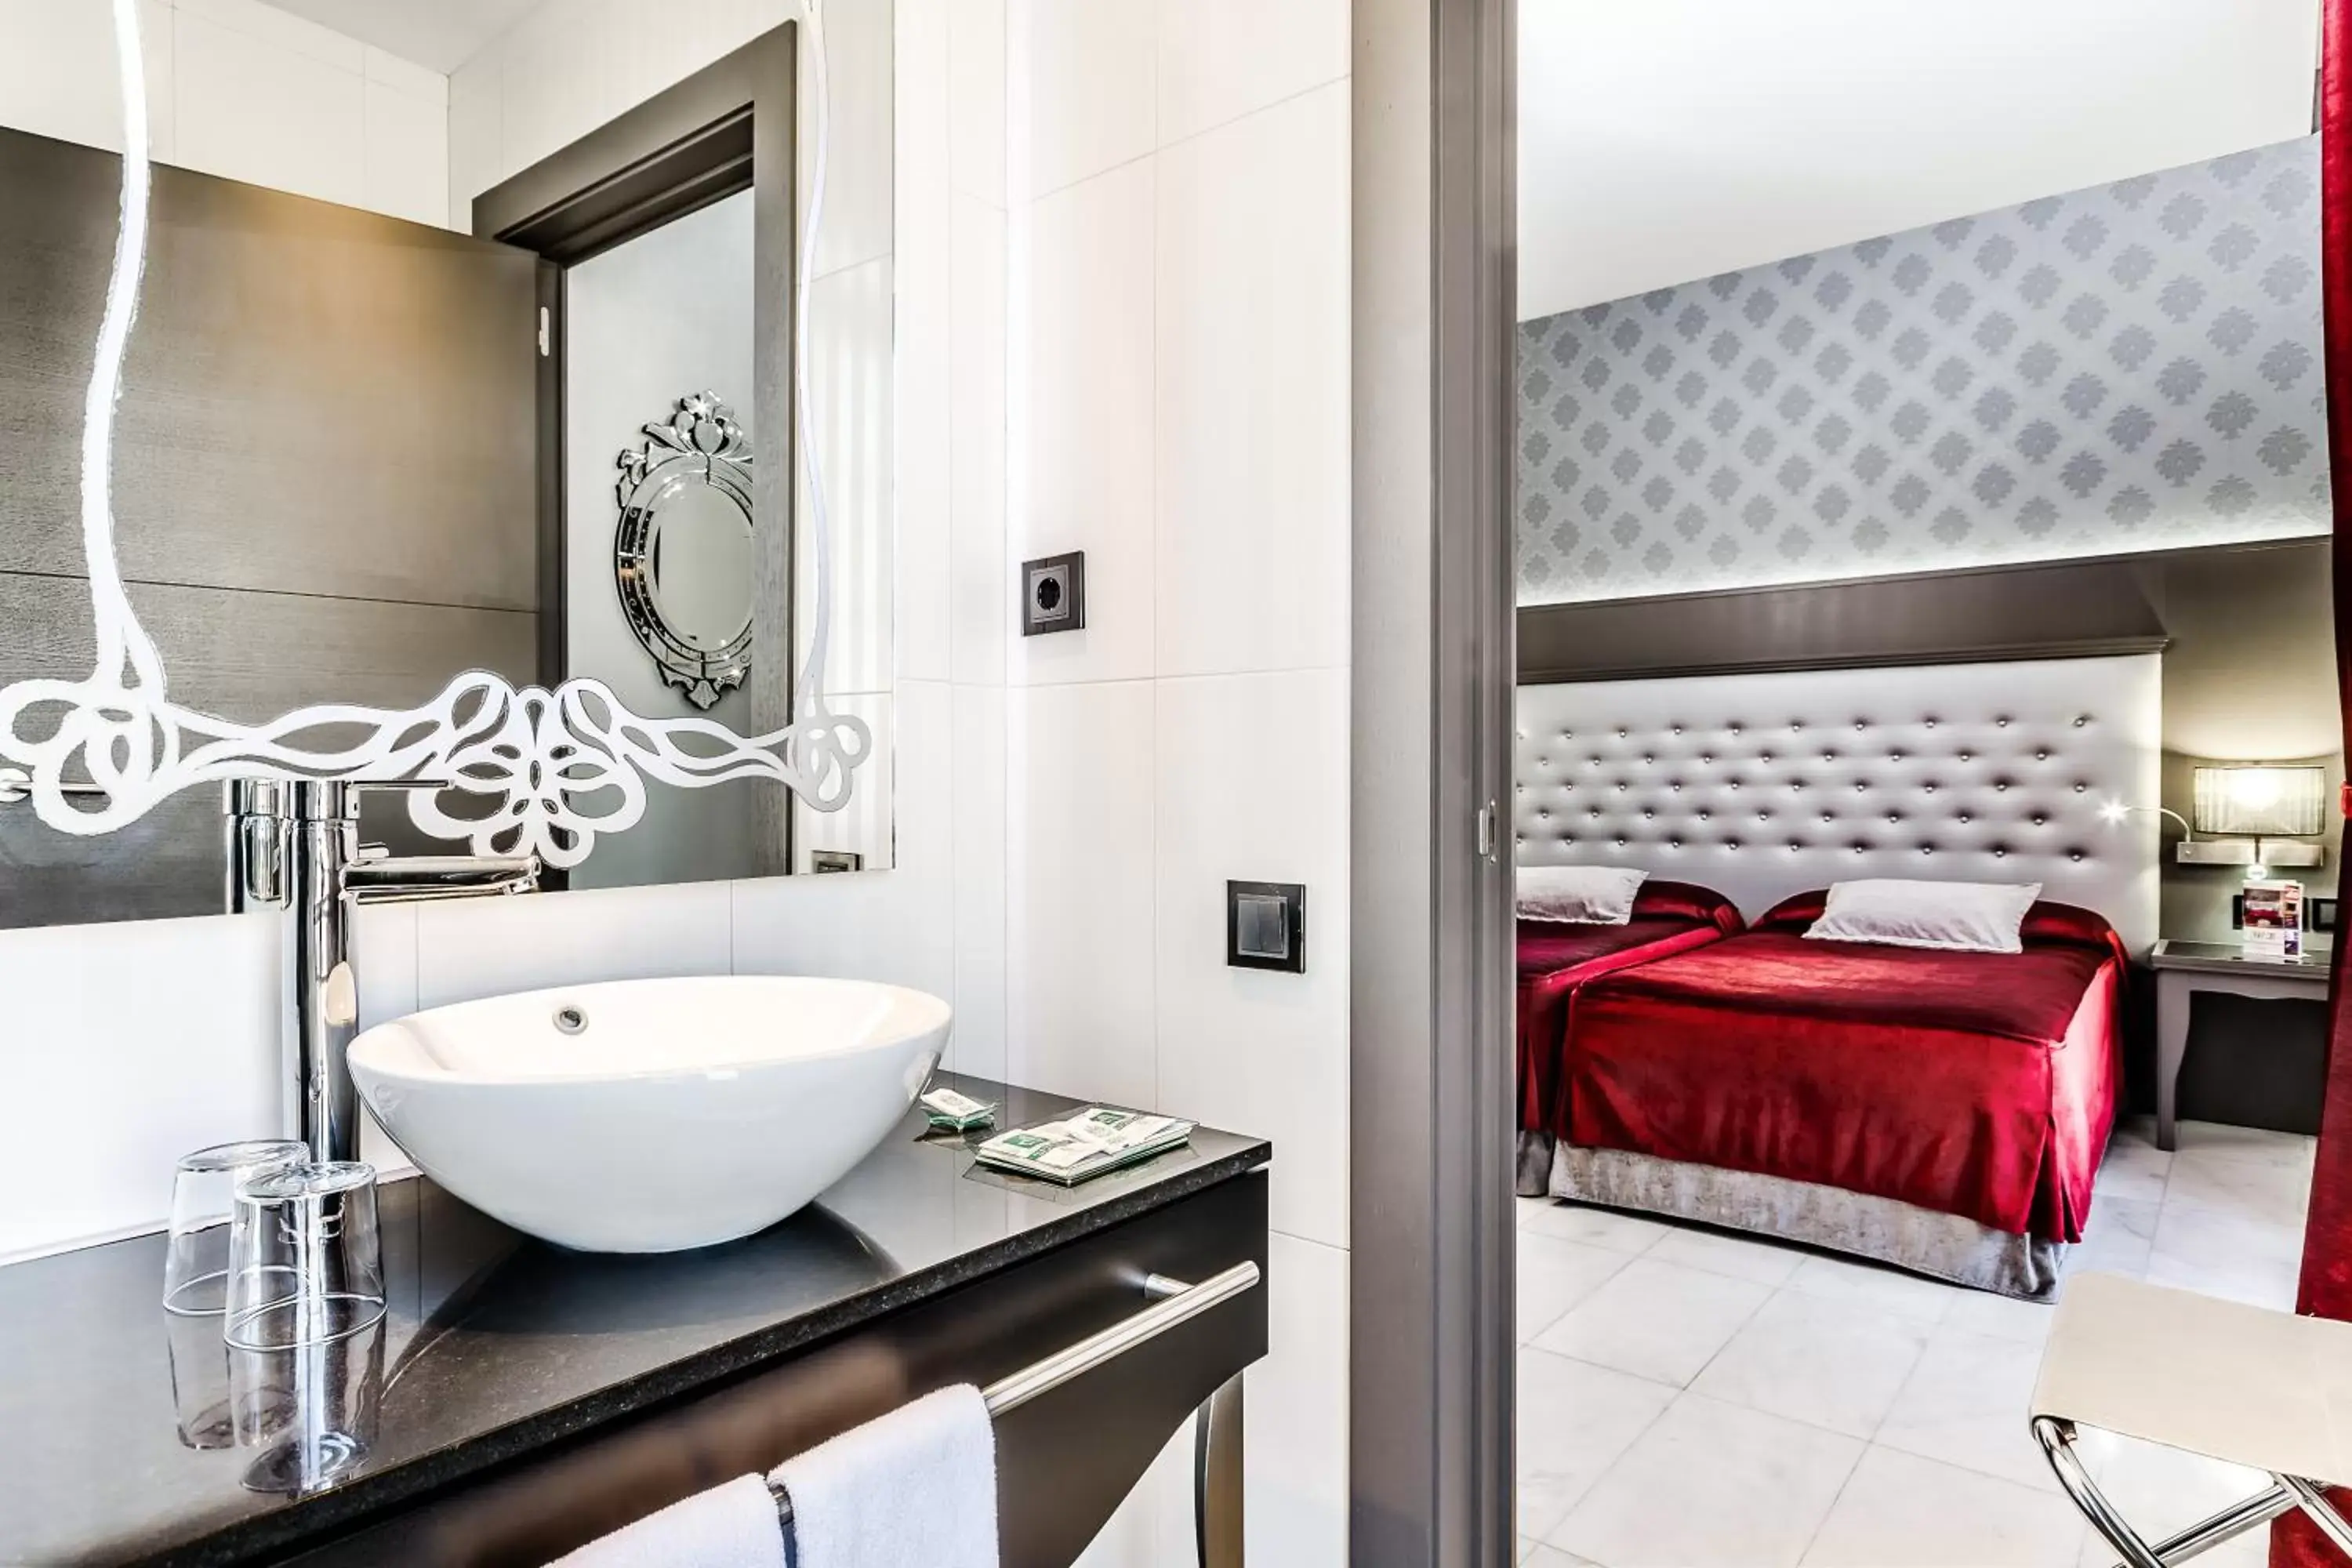 Photo of the whole room, Bathroom in Hotel Ciutadella Barcelona